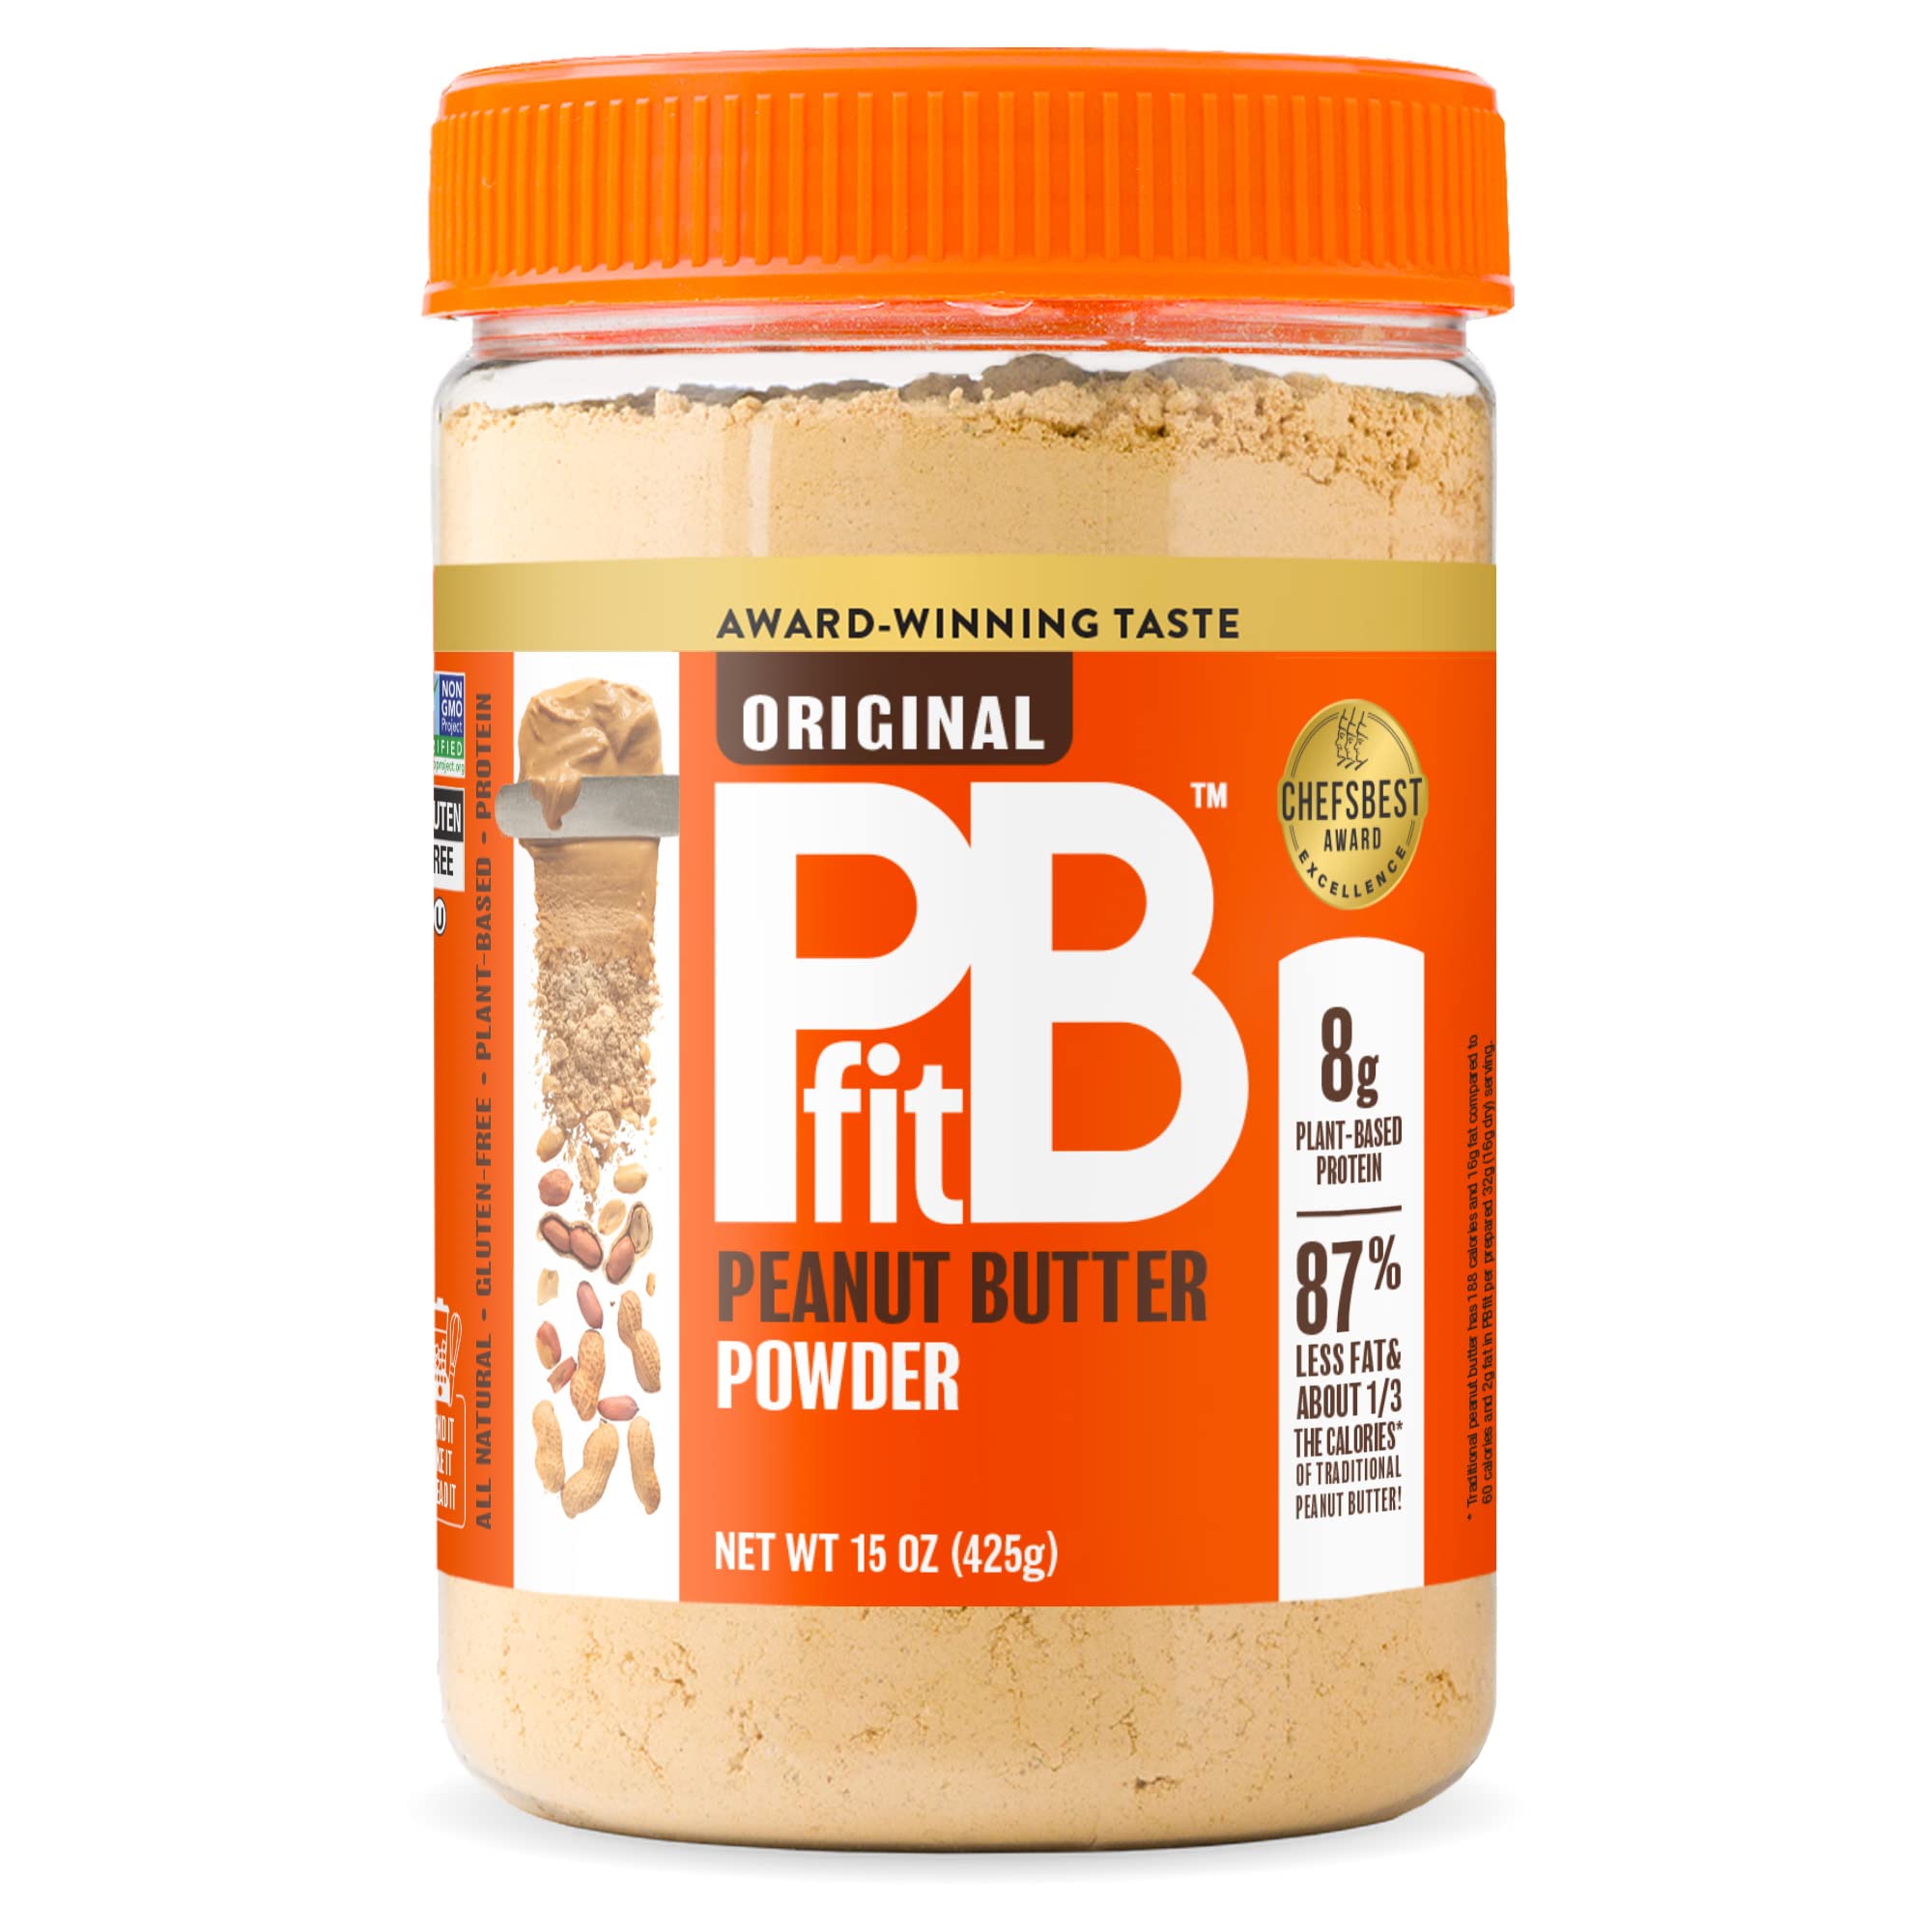 PB2 vs PBfit: The Peanut Butter Powder Comparison » Protein Snack